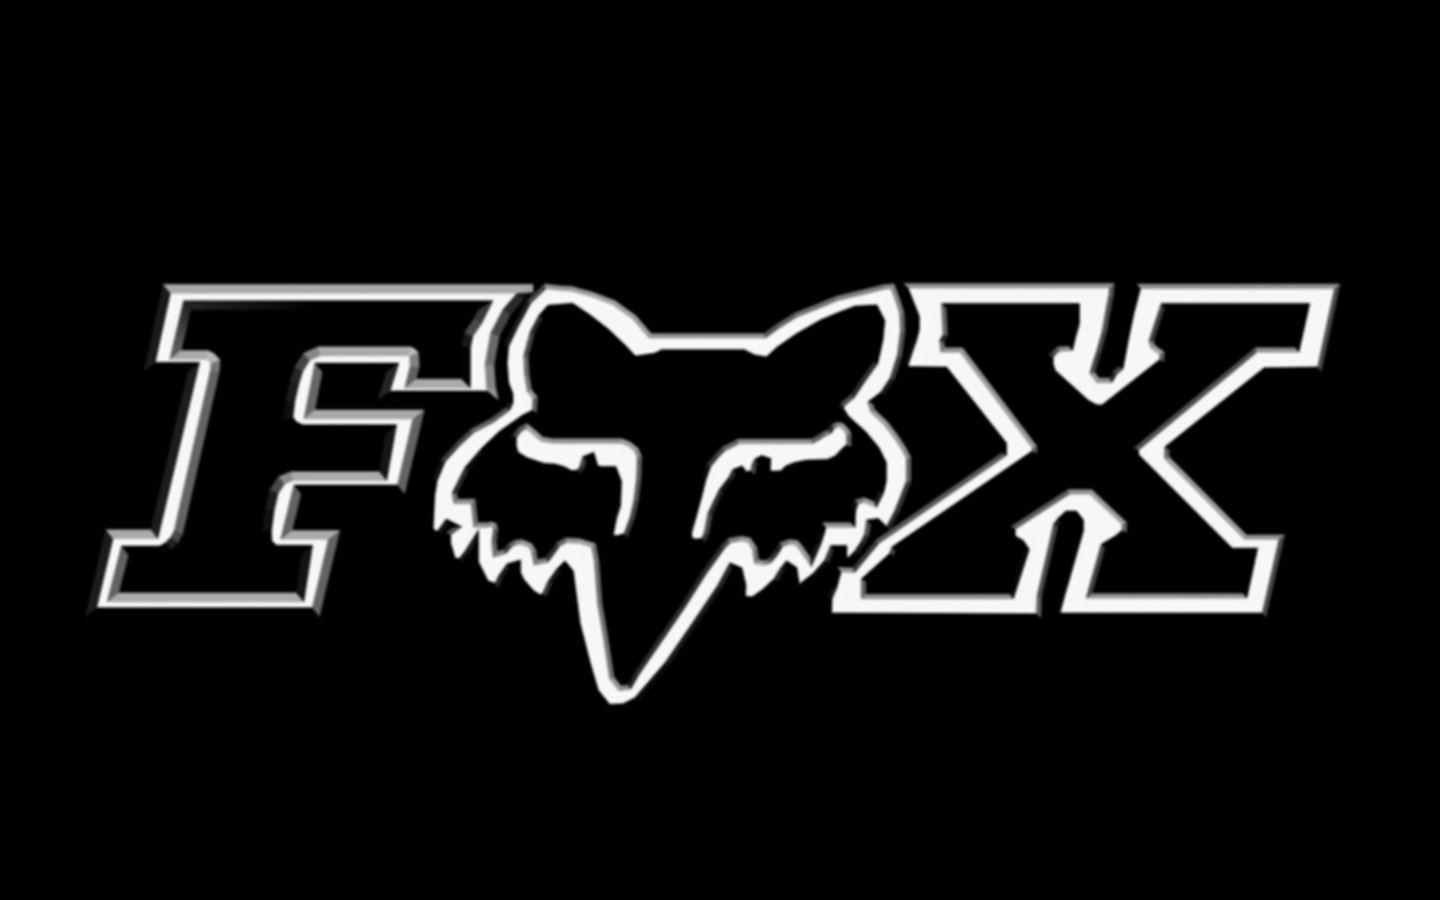 Cool Fox and Monster Logo - Cool Fox Racing Wallpaper